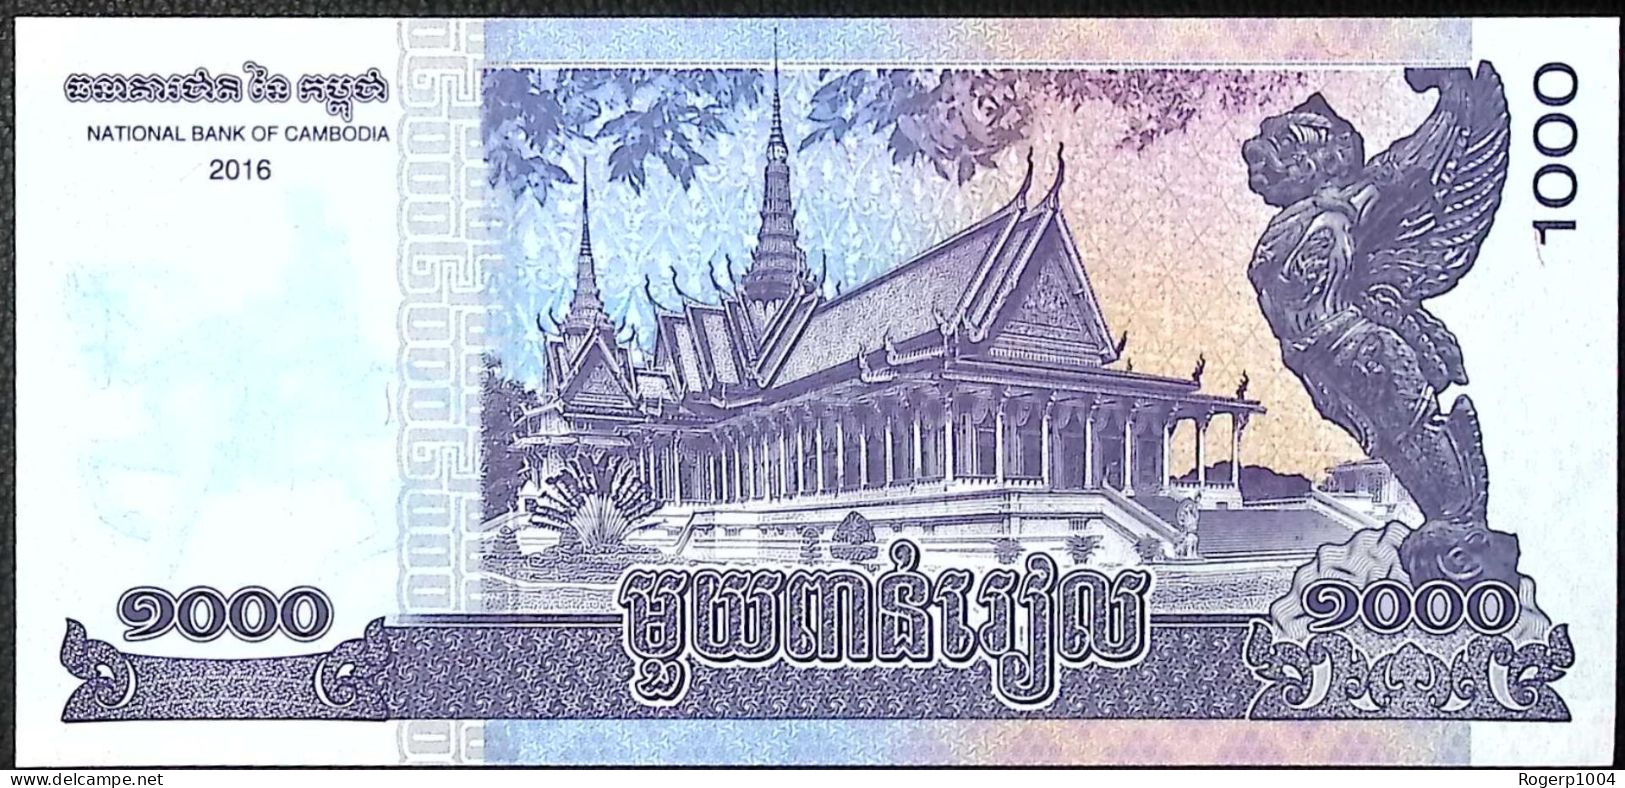 CAMBODGE/CAMBODIA * 1.000 Riels * Date 2016 * Etat/Grade NEUF/UNC * - Cambodia